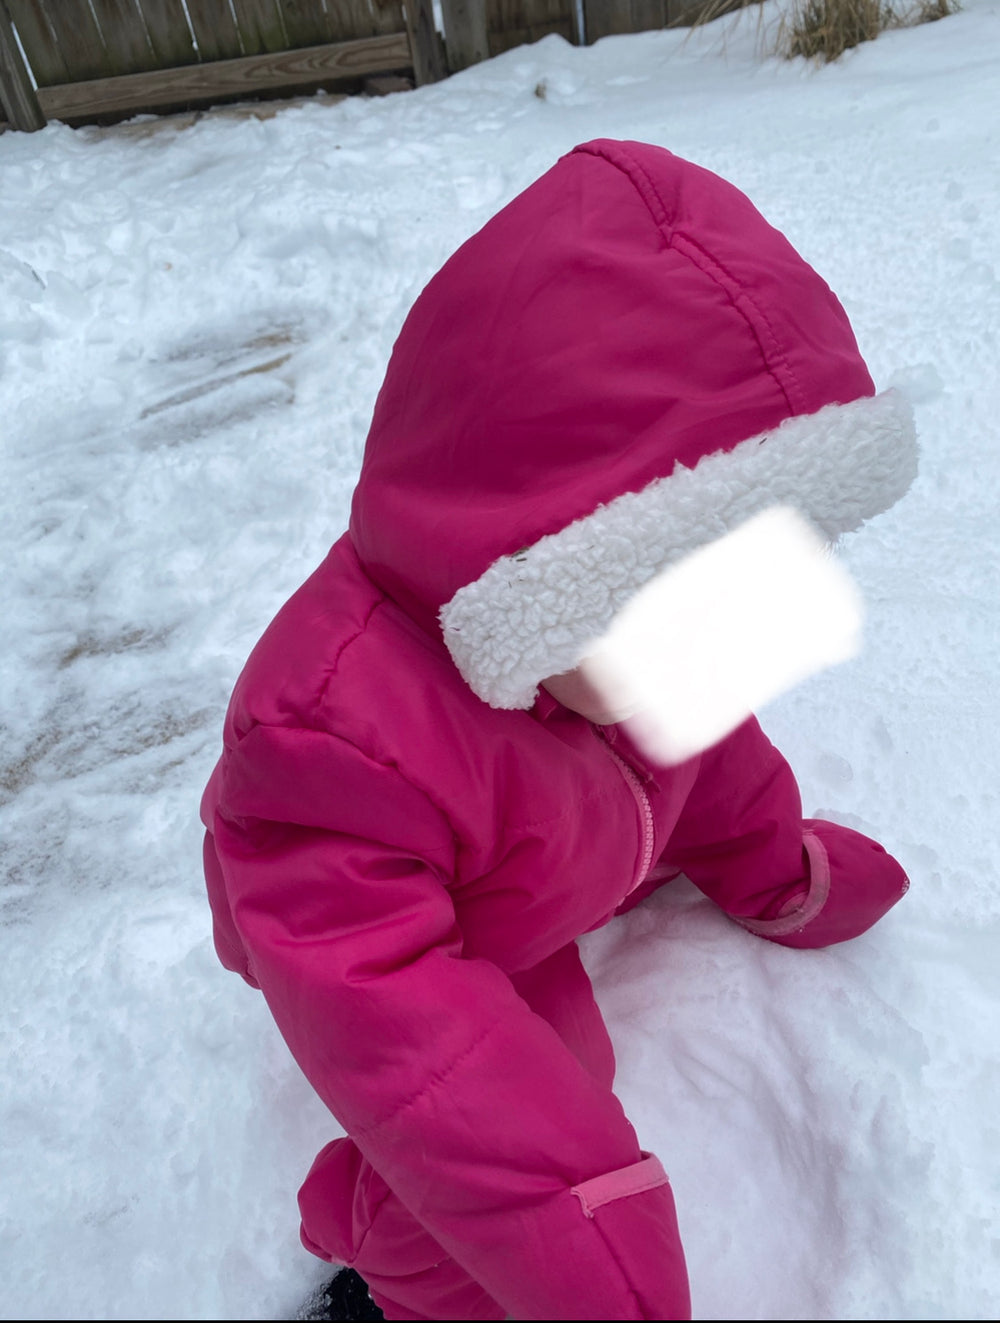 Baby Clothing snow suit 1-2yo